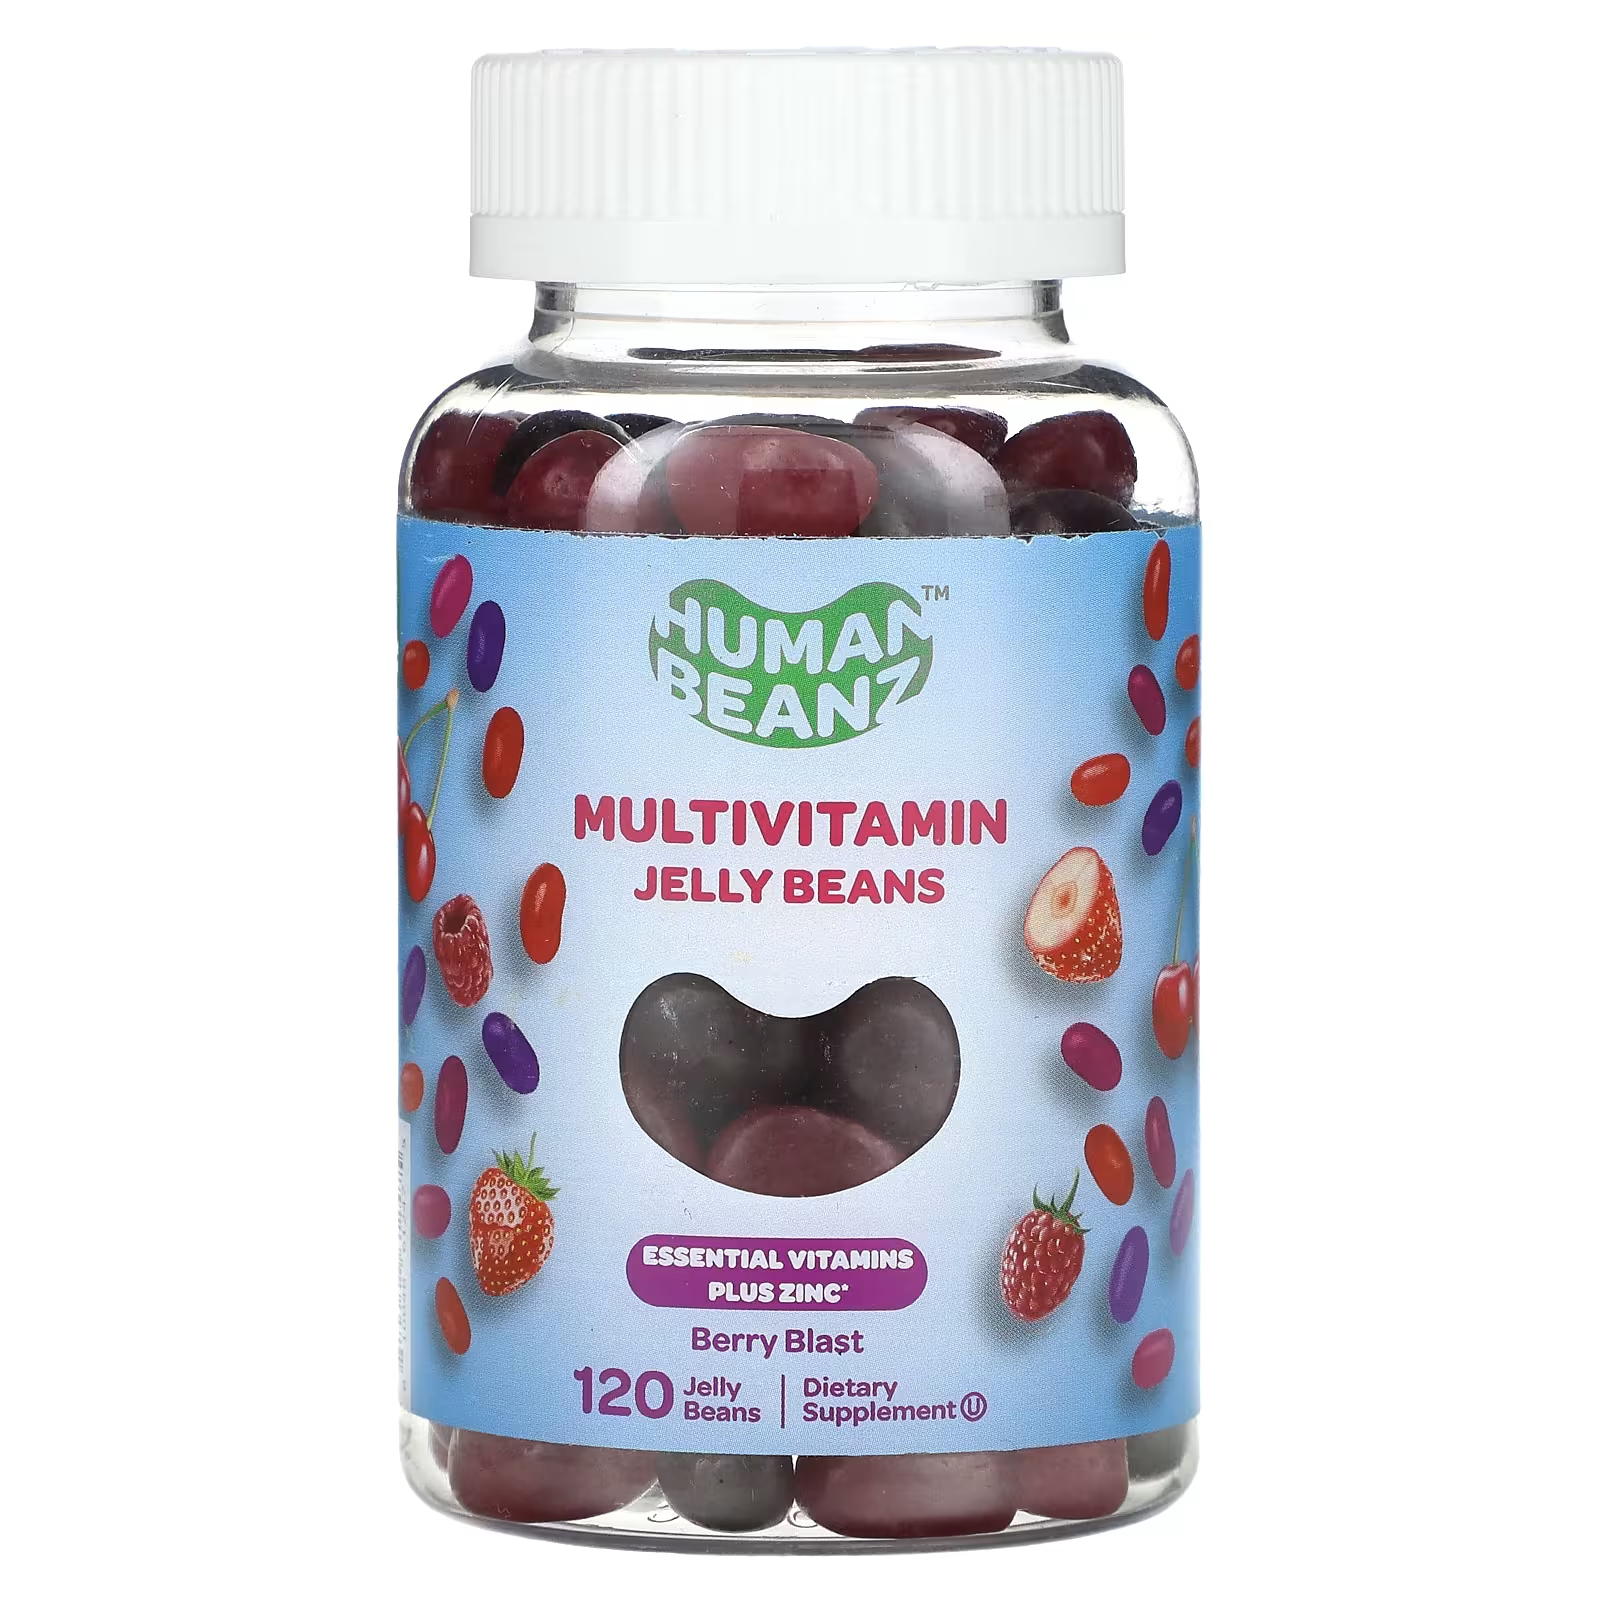 Мультивитаминная добавка Human Beanz Berry Blast, 120 жевательных конфет мультивитаминная добавка nature s craft kids фруктовое ассорти 180 жевательных конфет